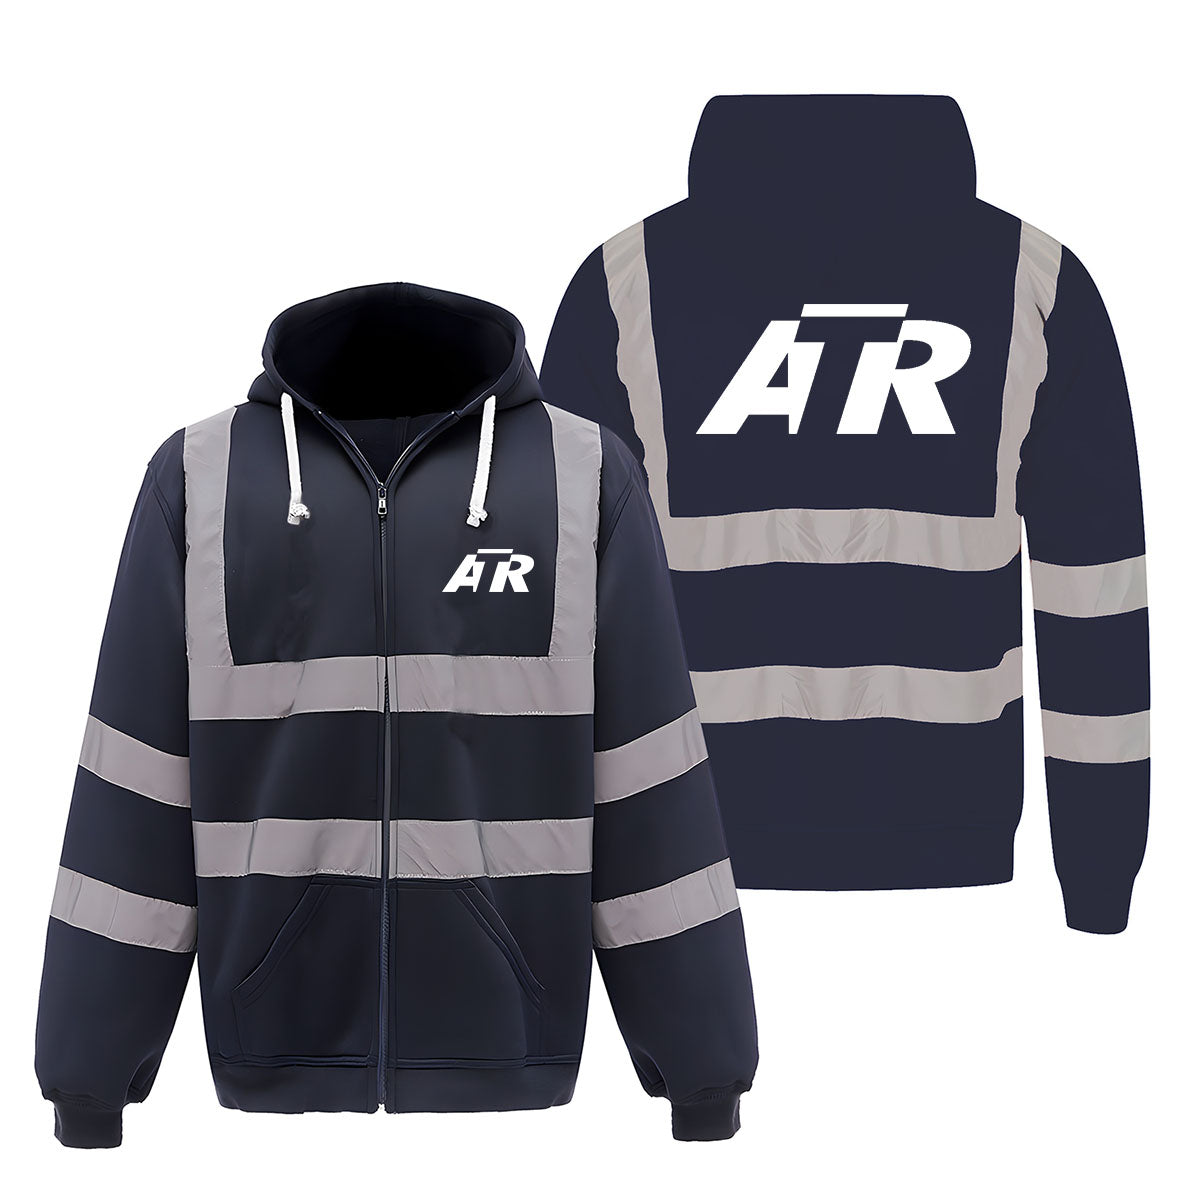 ATR & Text Designed Reflective Zipped Hoodies